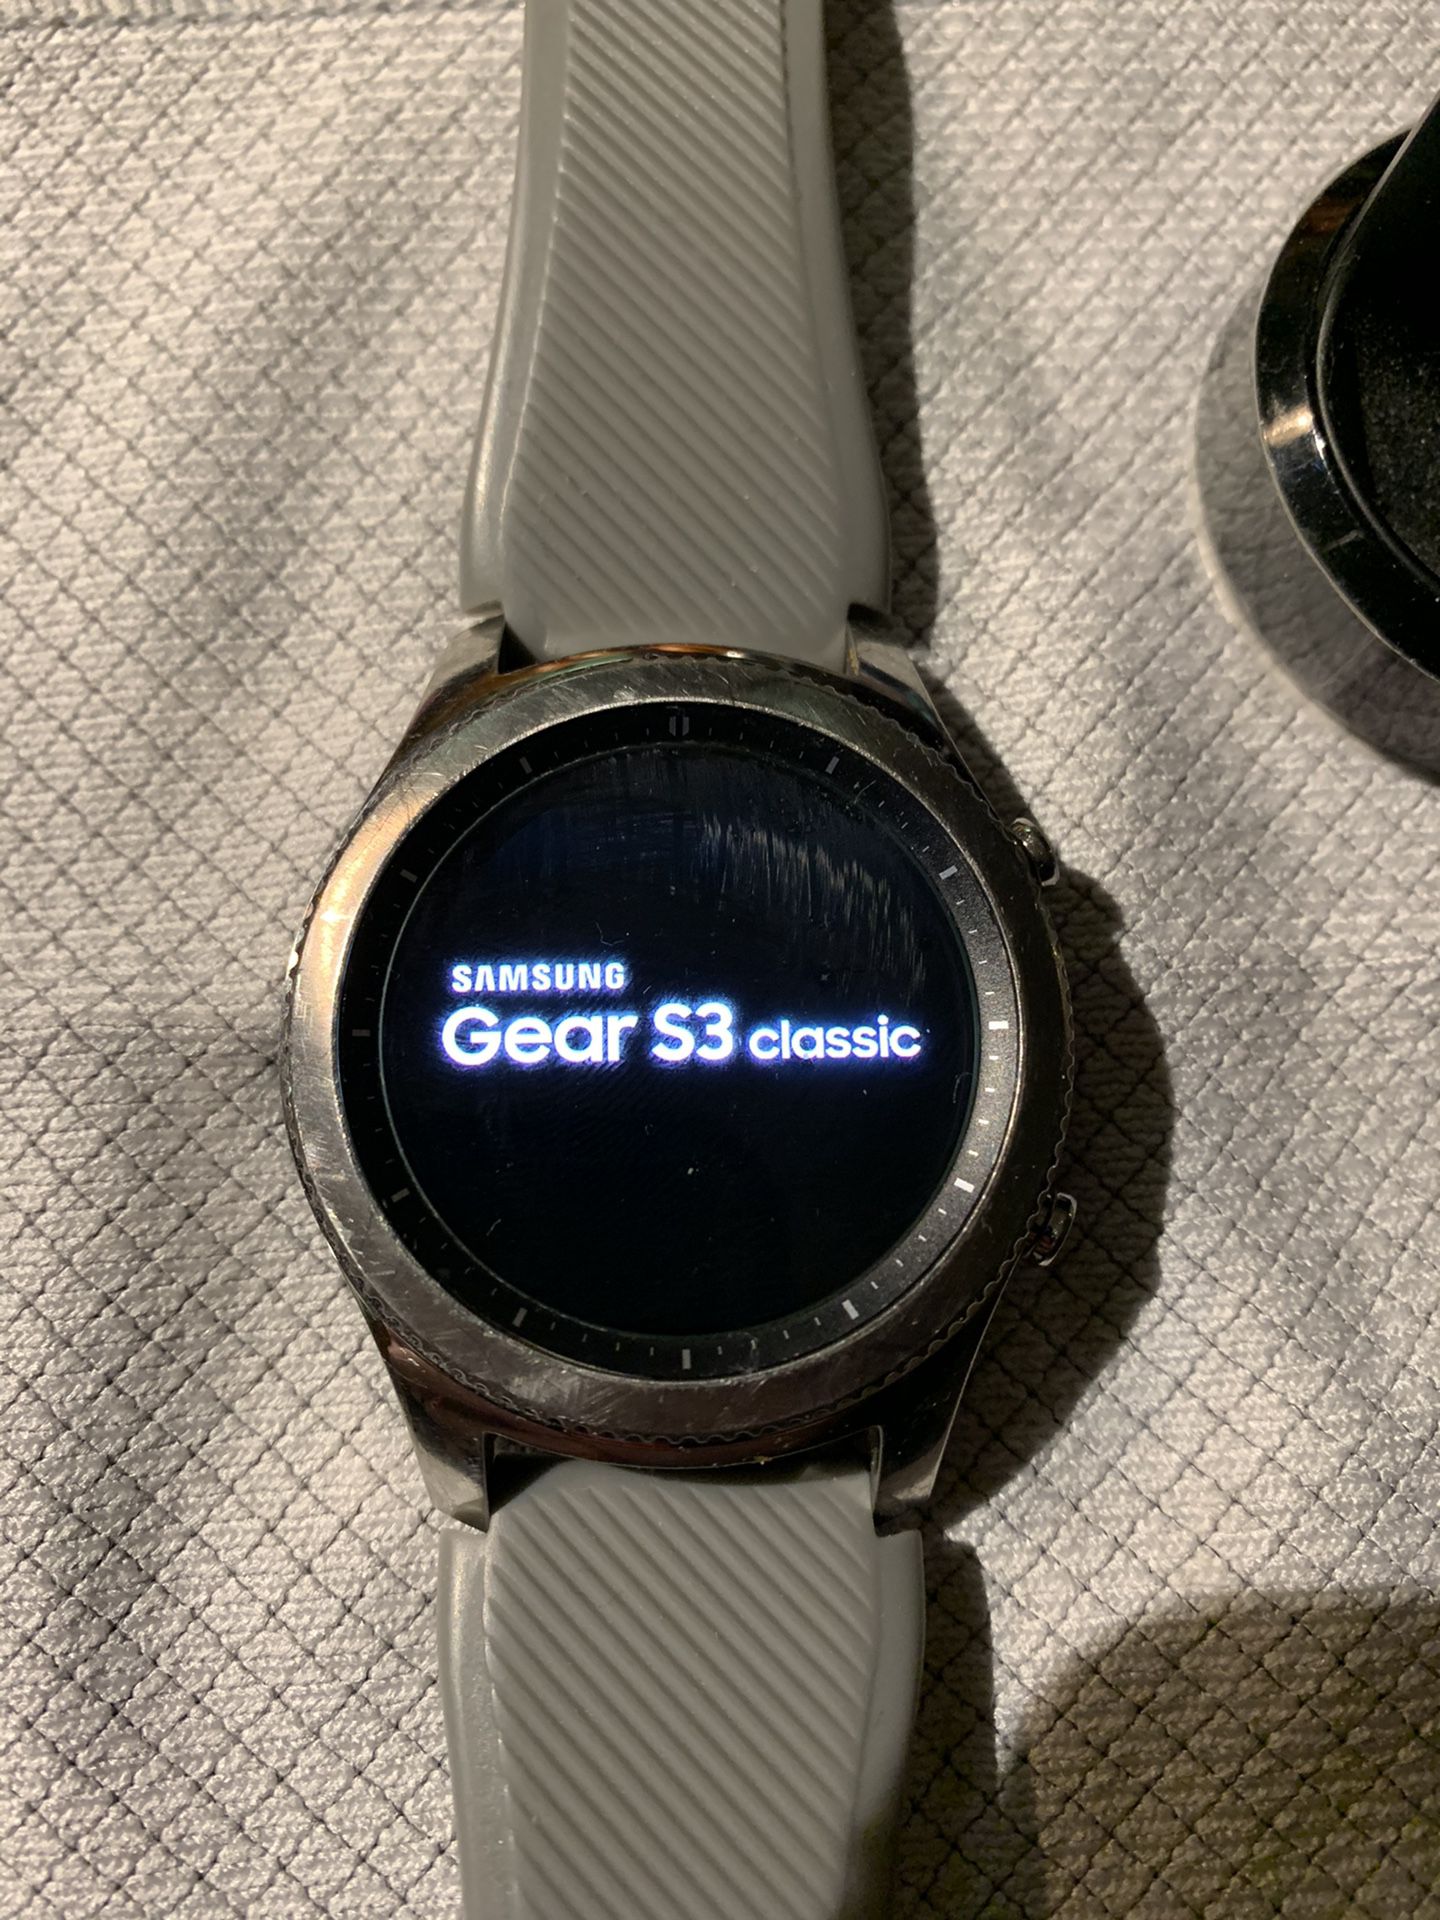 Samsung Gear S3 classic watch